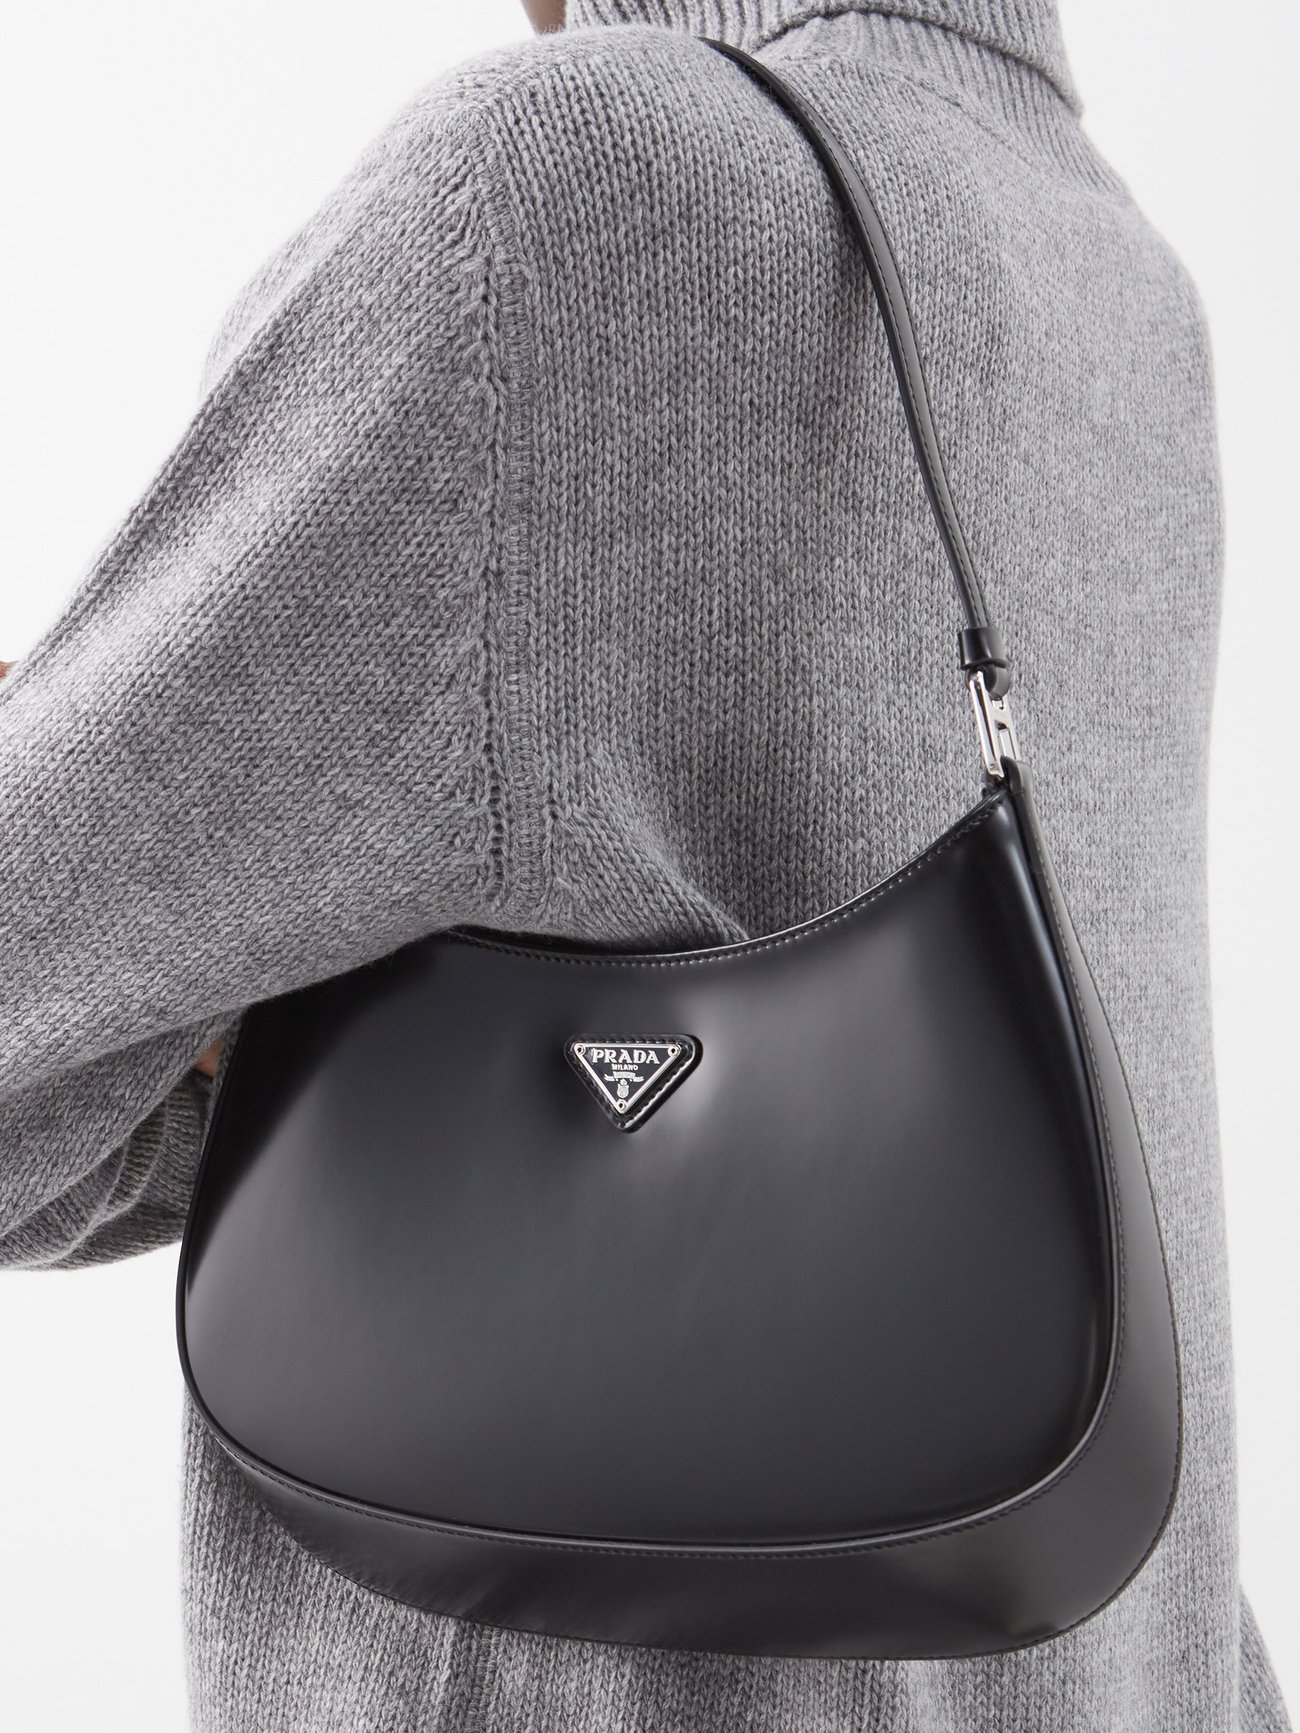 Prada Large Leather Handbag in Gray